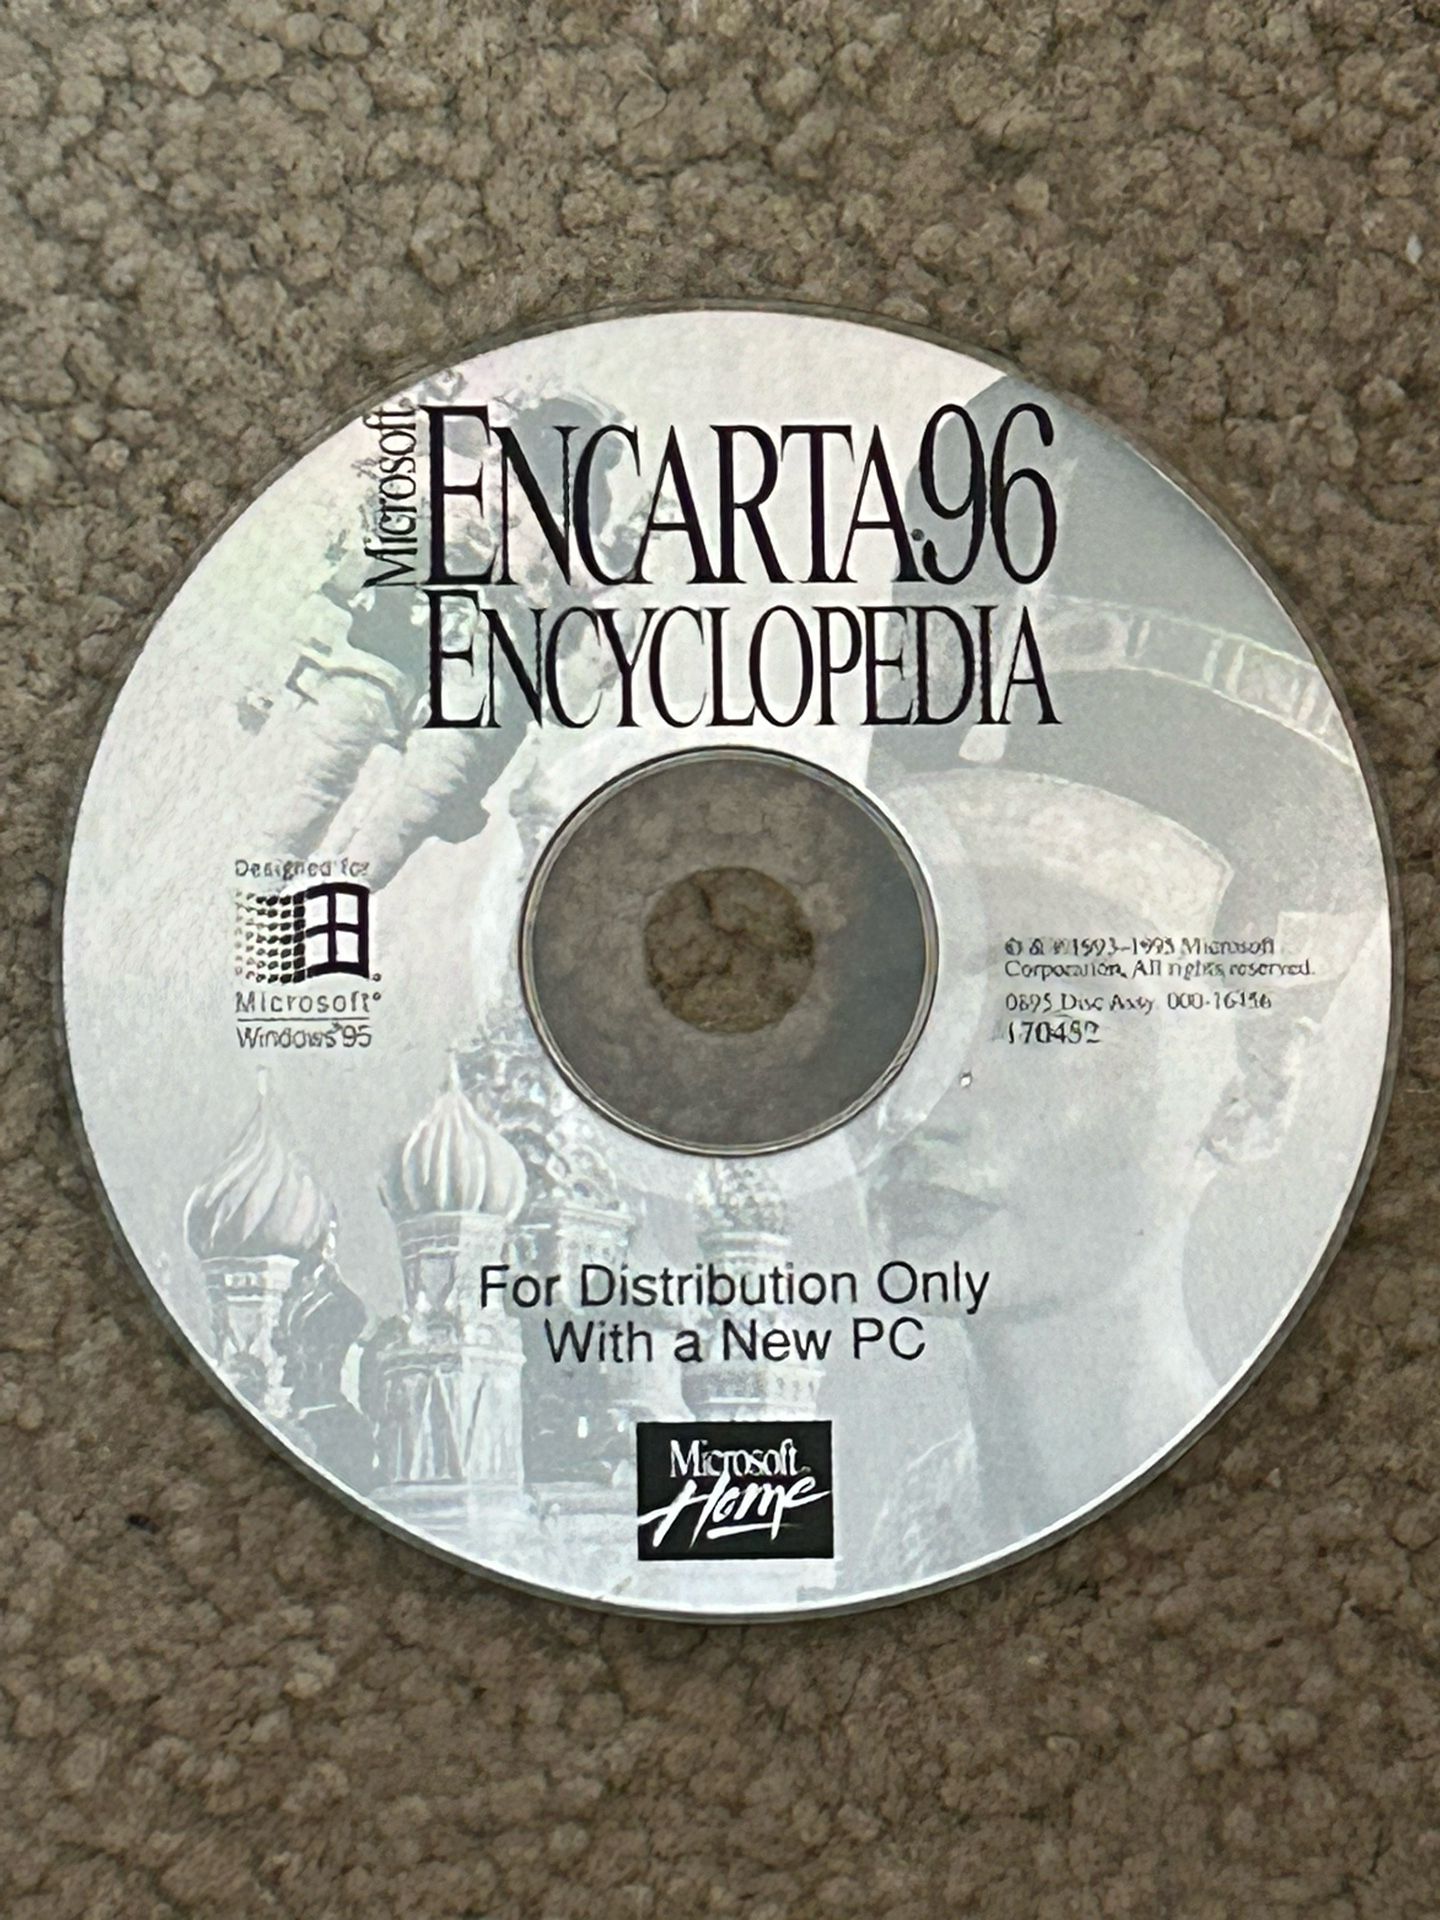 Vintage Microsoft Encarta 96 Encyclopedia PC CD-ROM Designed for Windows 95